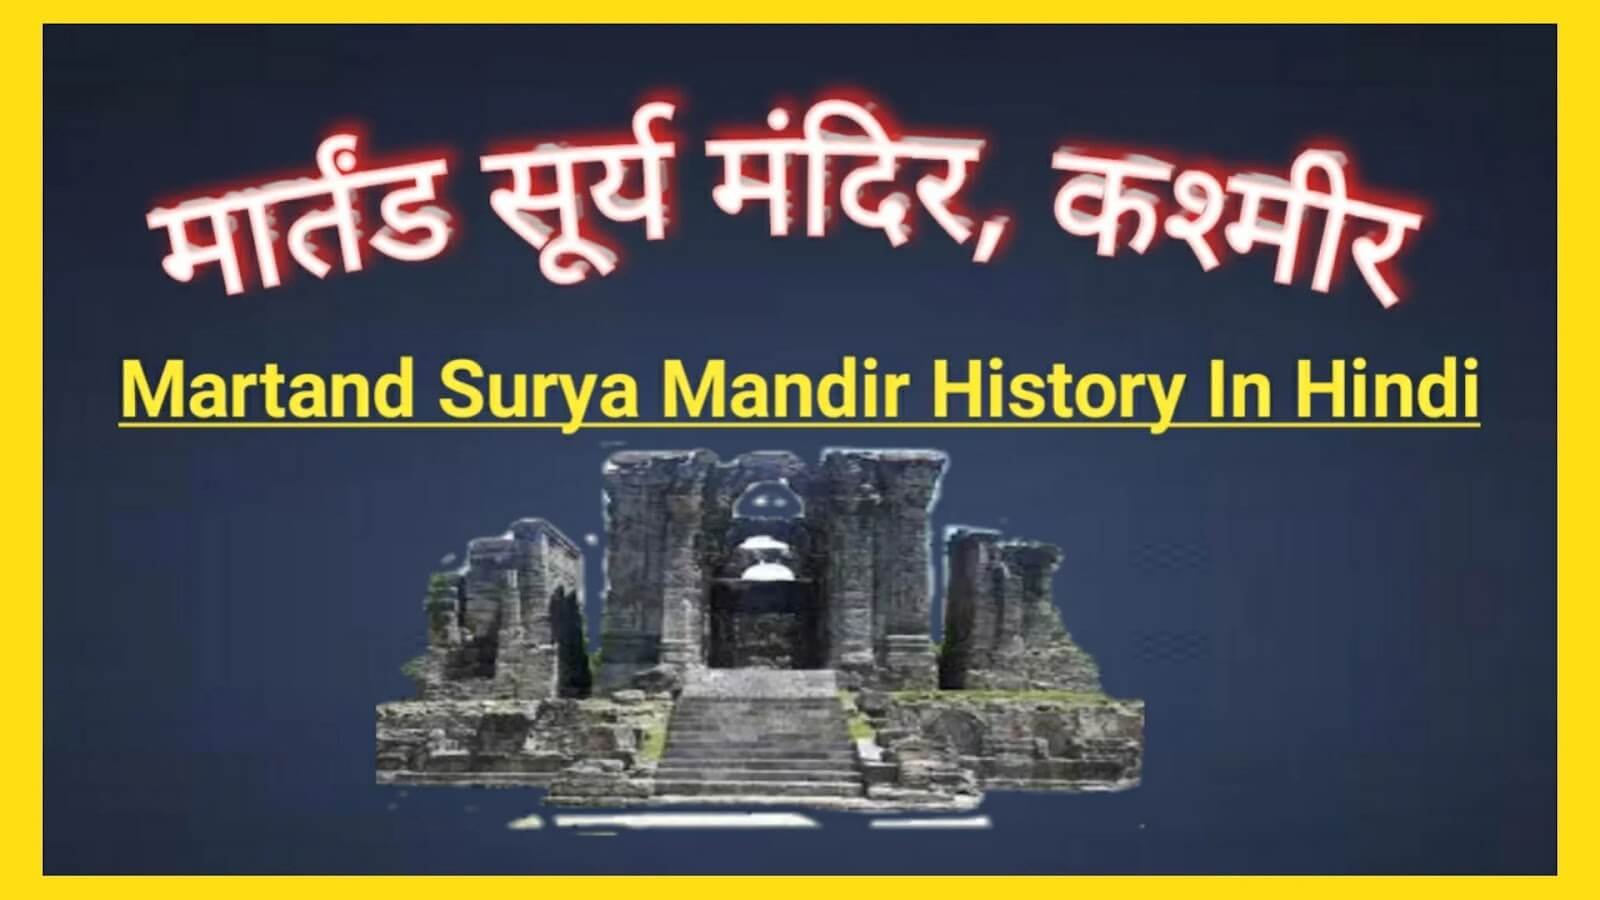 Martand Surya Mandir History In Hindi